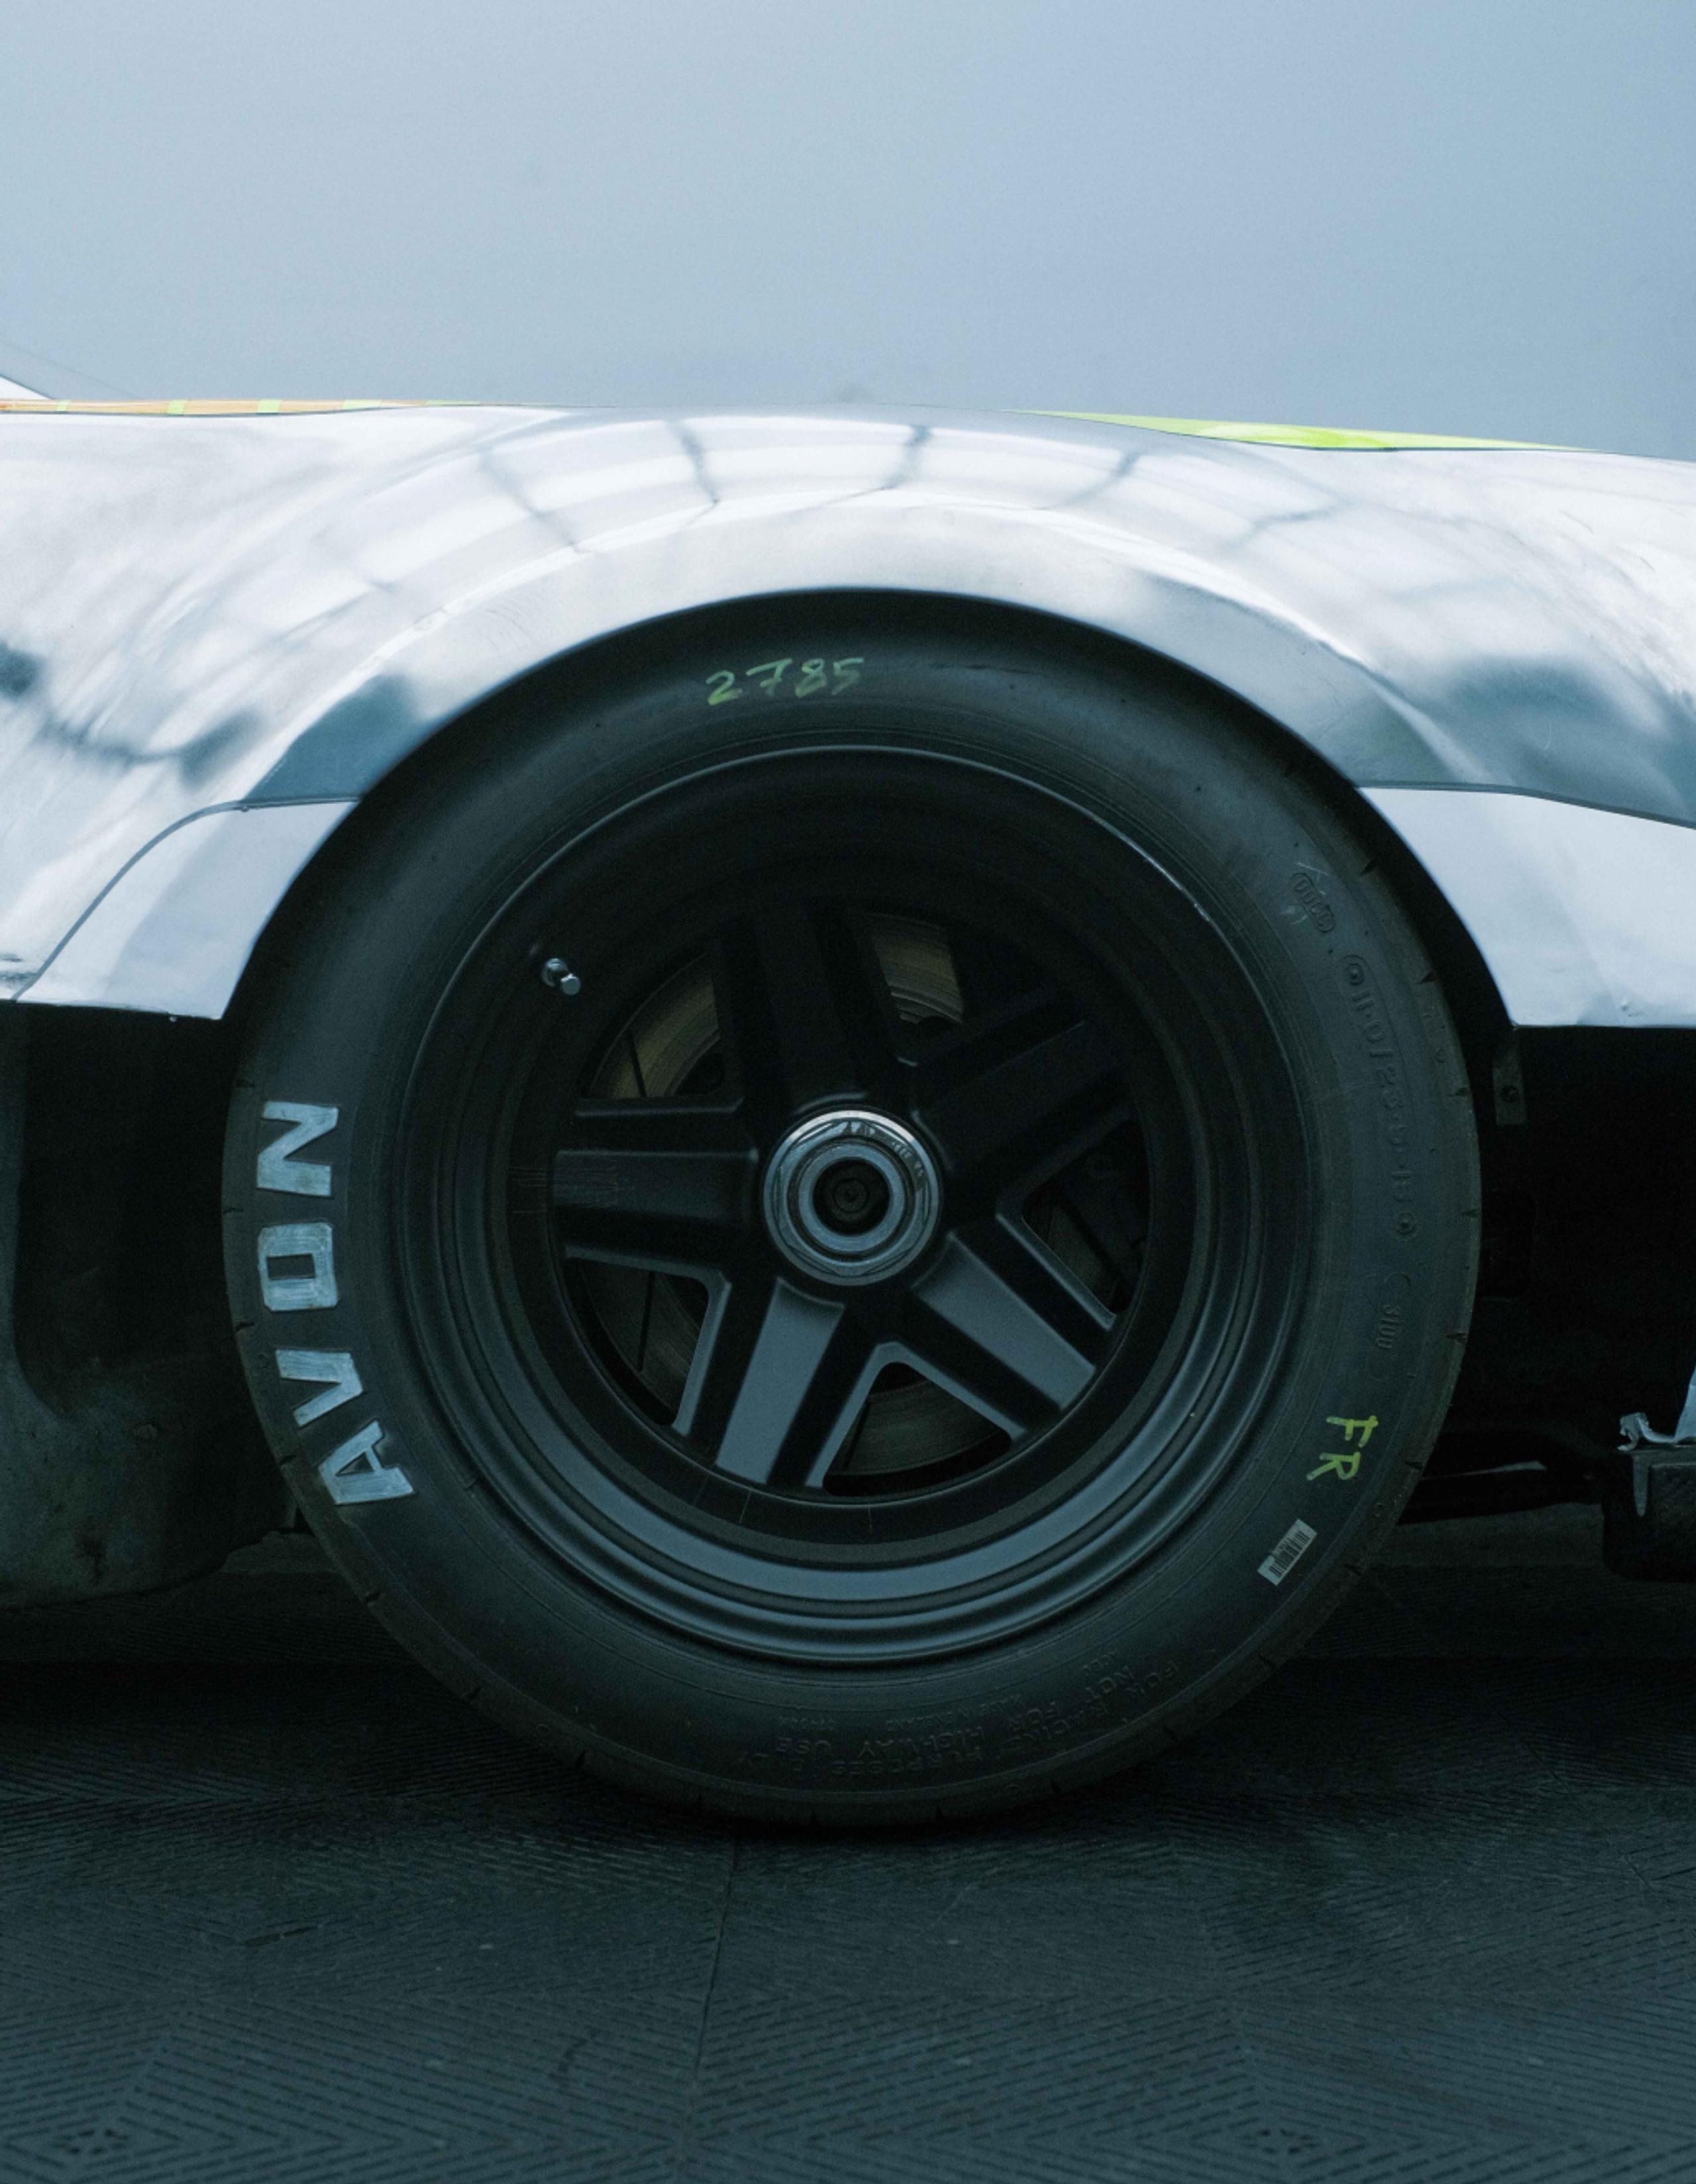 Closeup detail of race car wheel